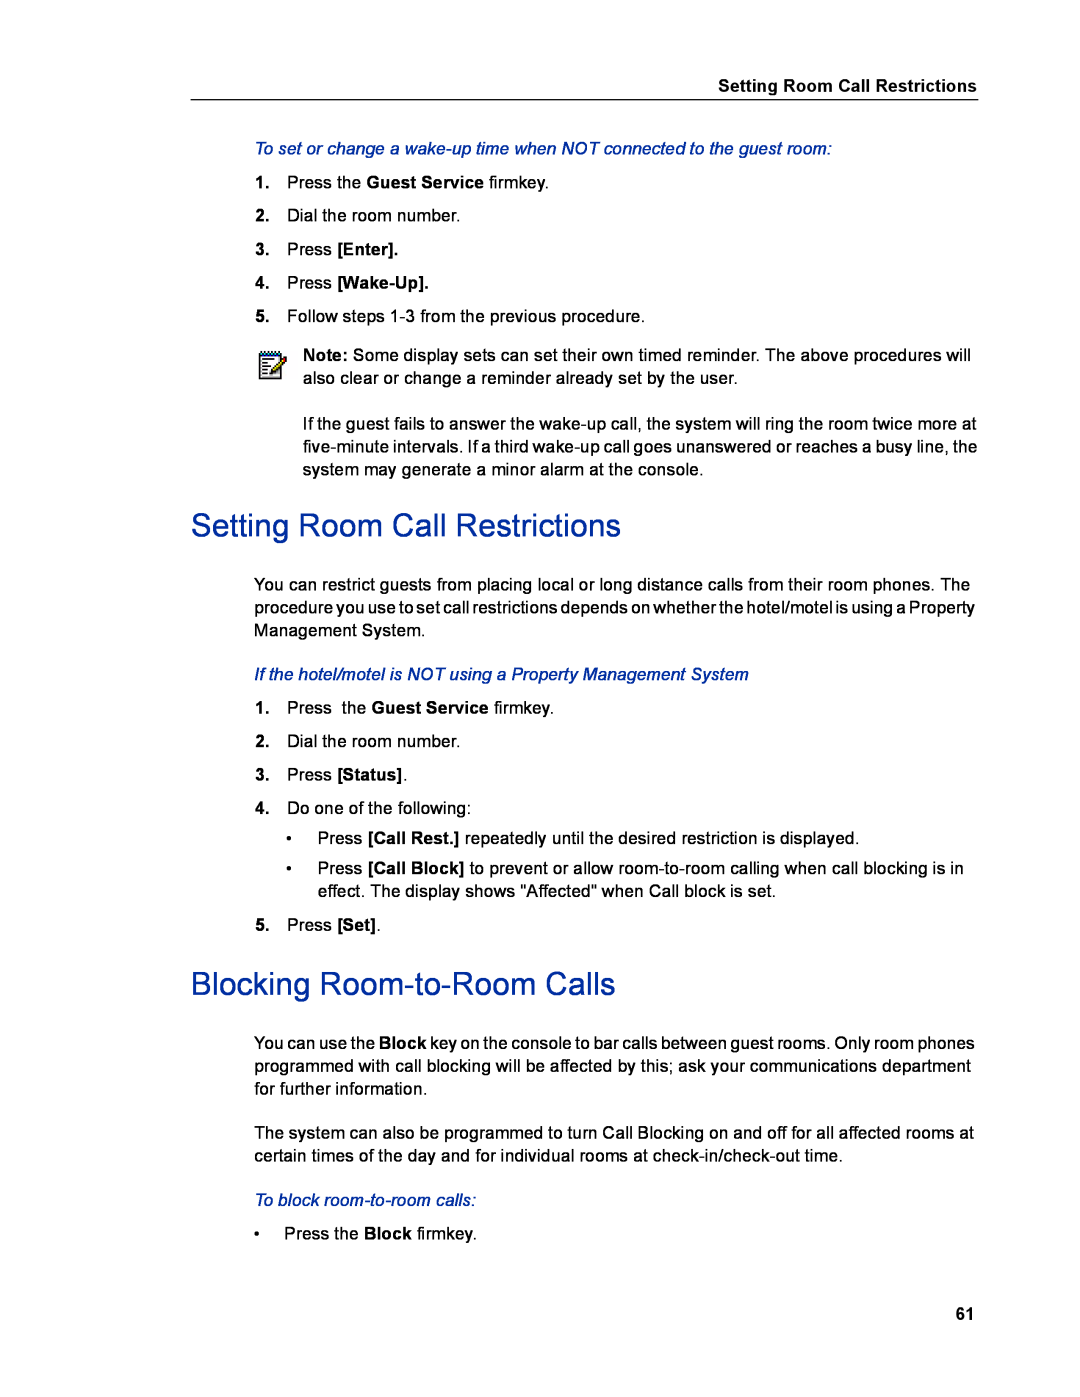 Mitel 5540 manual Setting Room Call Restrictions, Blocking Room-to-RoomCalls, Press Enter 4.Press Wake-Up, Press Status 